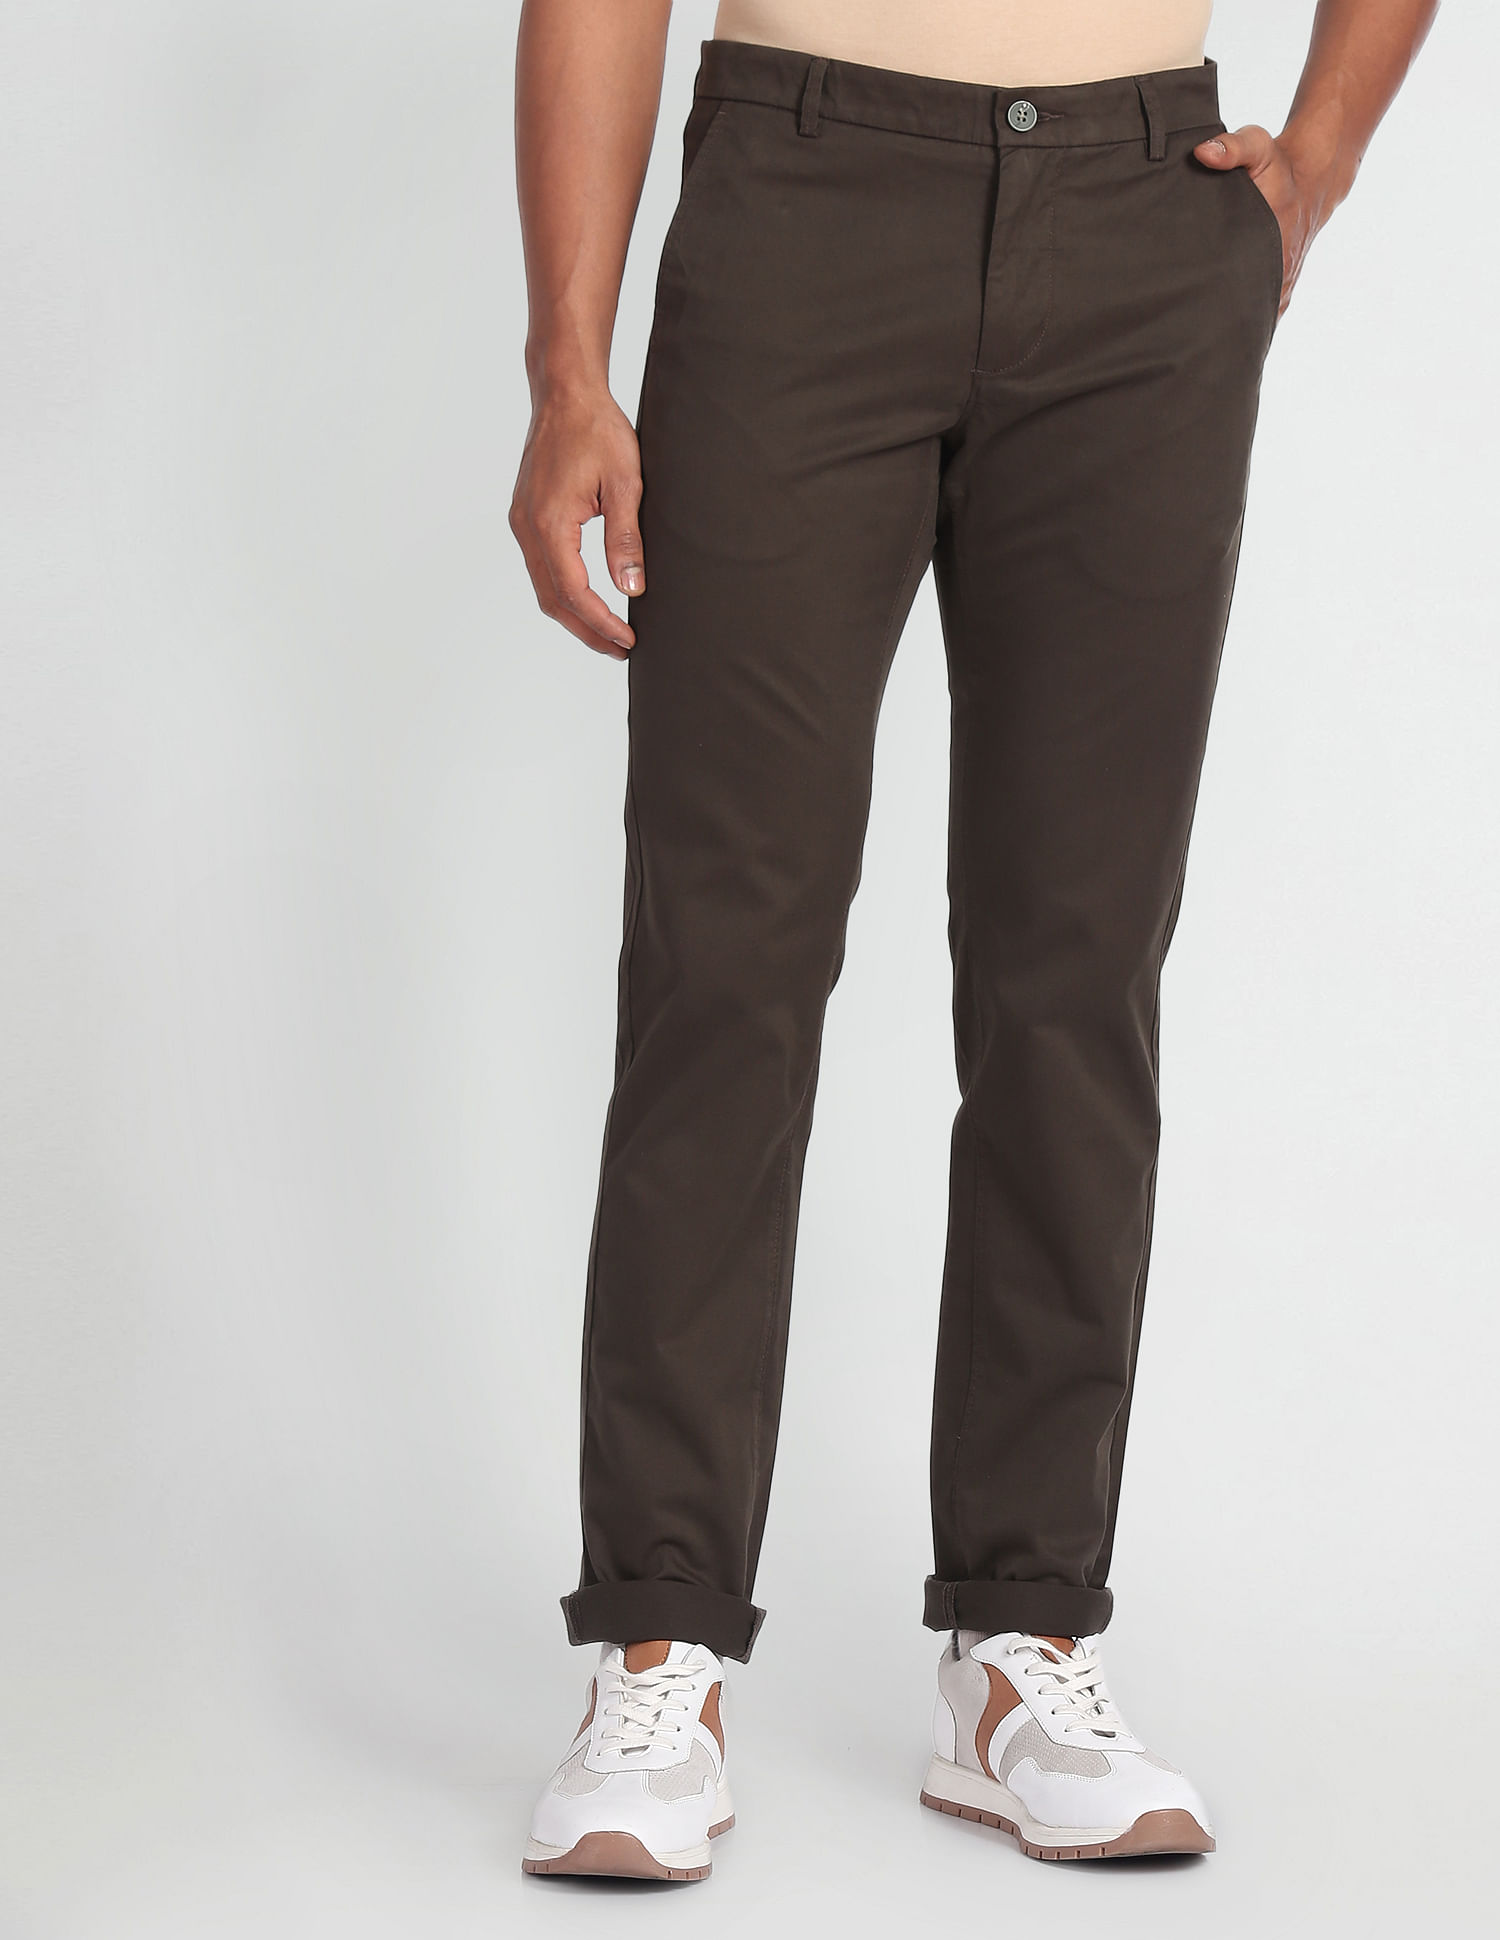 Hfyihgf Mens Slim Fit Wrinkle Resistant Chino Pant Comfort Stretch  Straight-Legs Pants Cotton Slacks Big & Tall Tapered Lightweight Trousers(Pink,4XL)  - Walmart.com